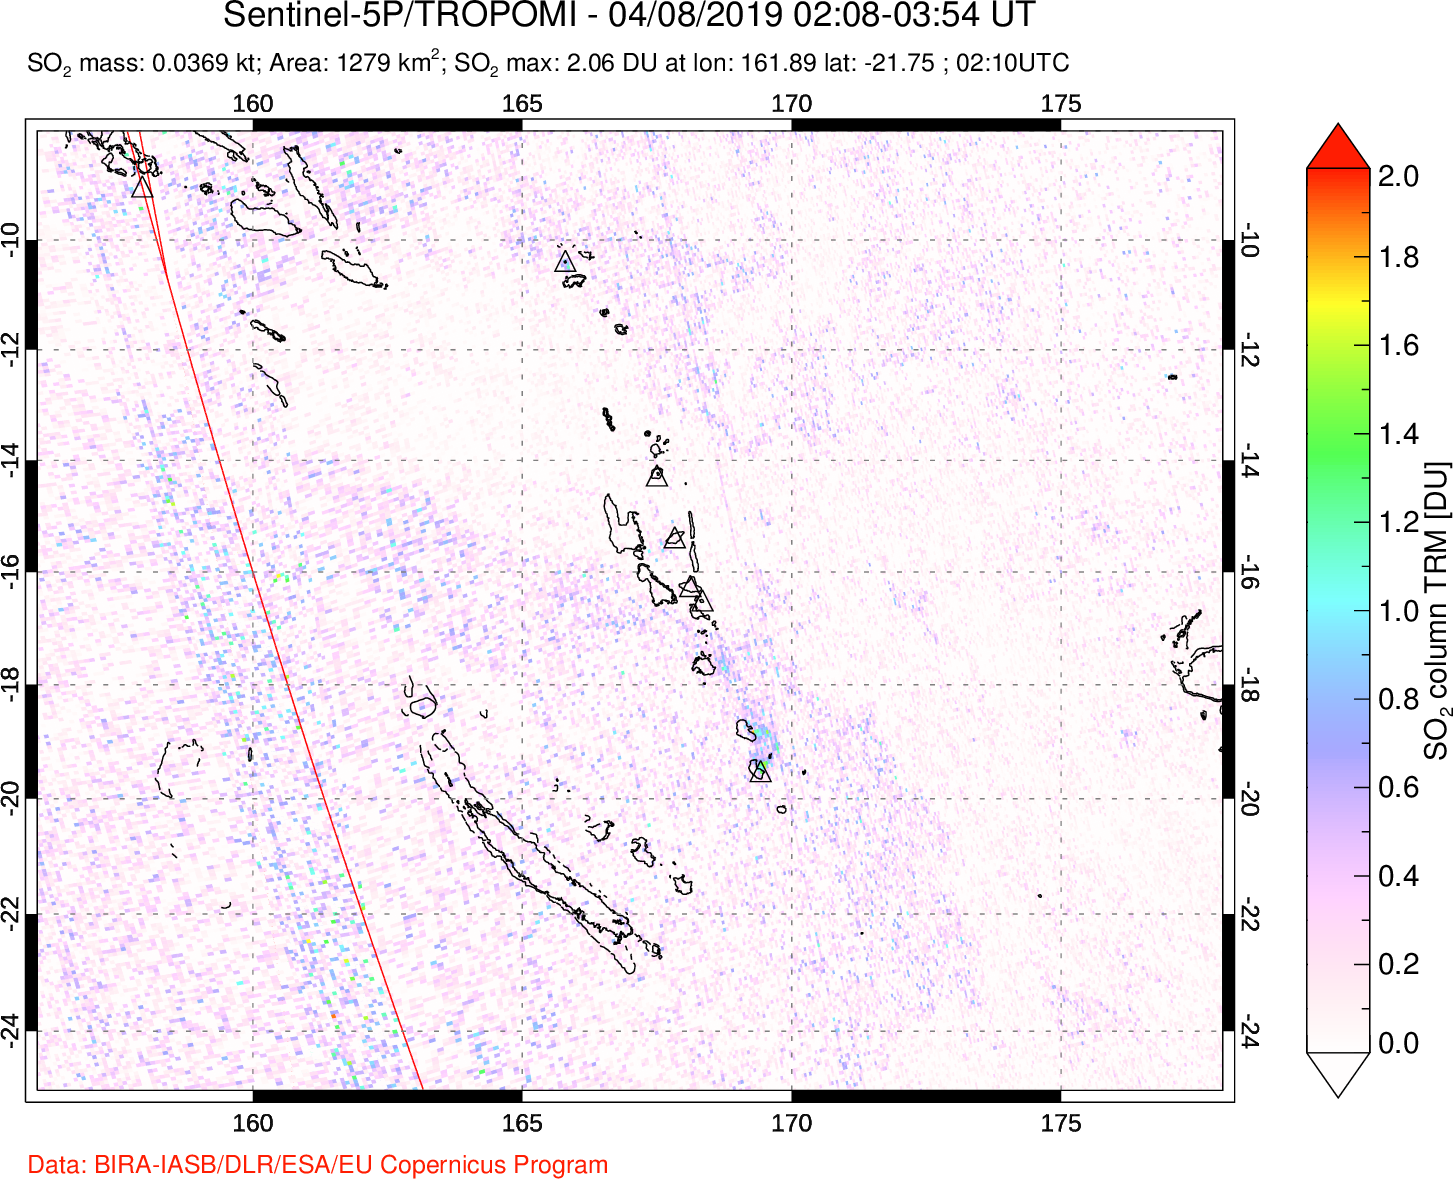 A sulfur dioxide image over Vanuatu, South Pacific on Apr 08, 2019.